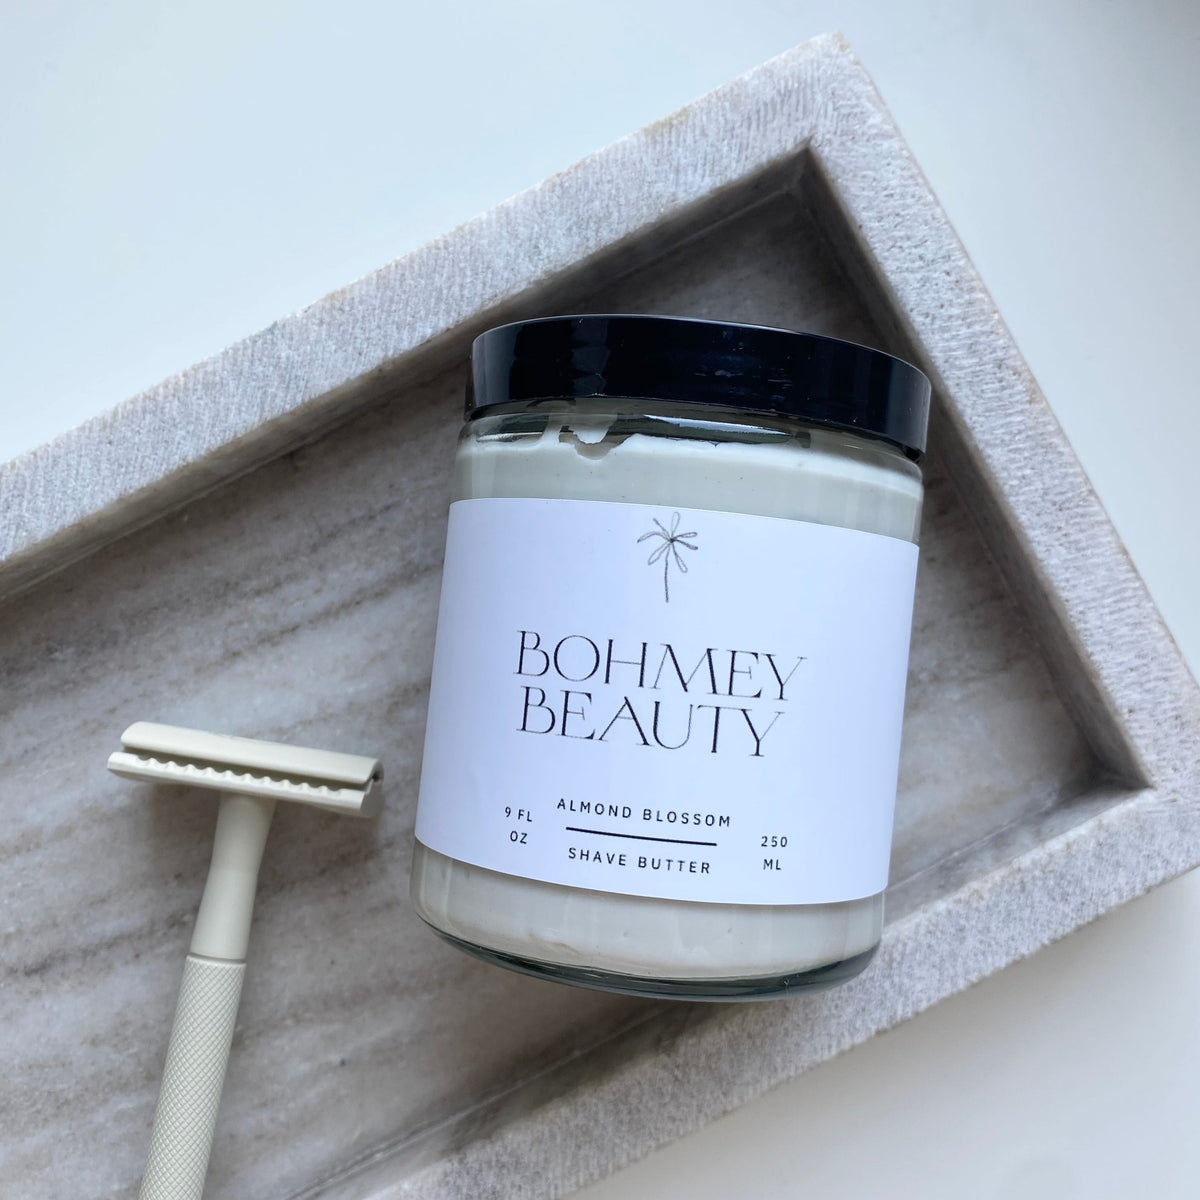 Bohmey Beauty Shave Butter